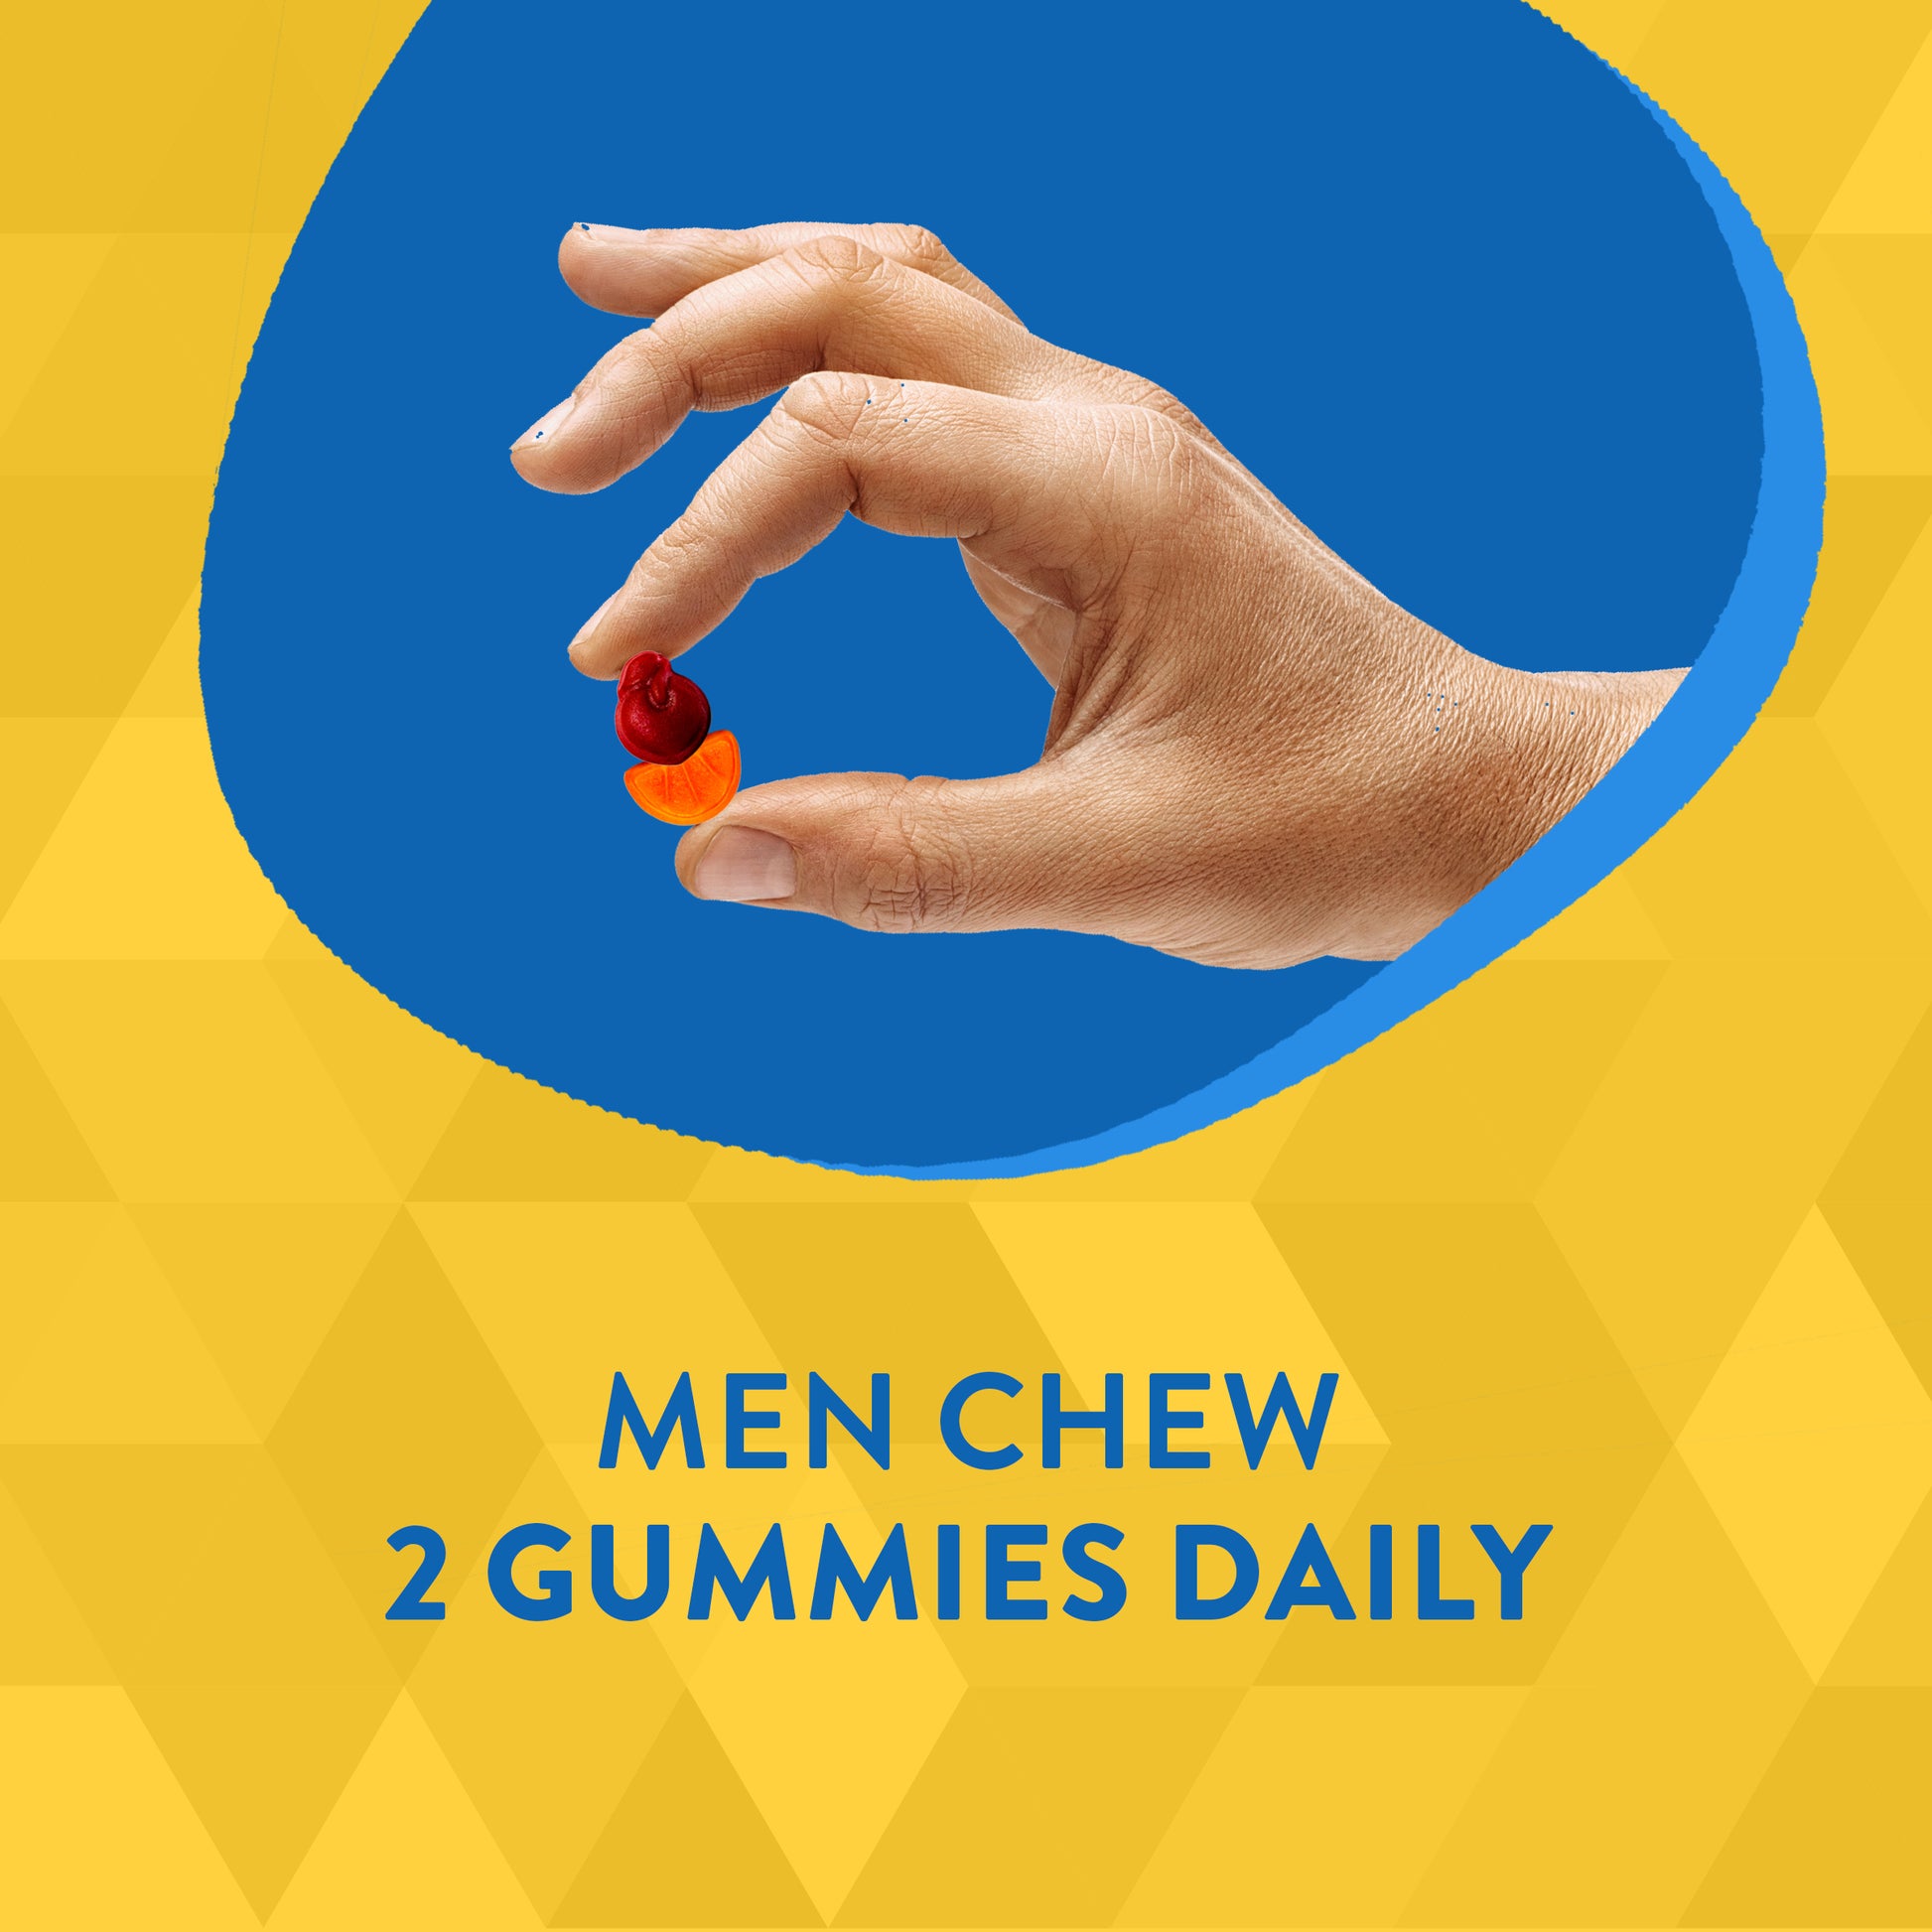 Nature's Way® | Alive!® Men's 50+ Gummy Multivitamin